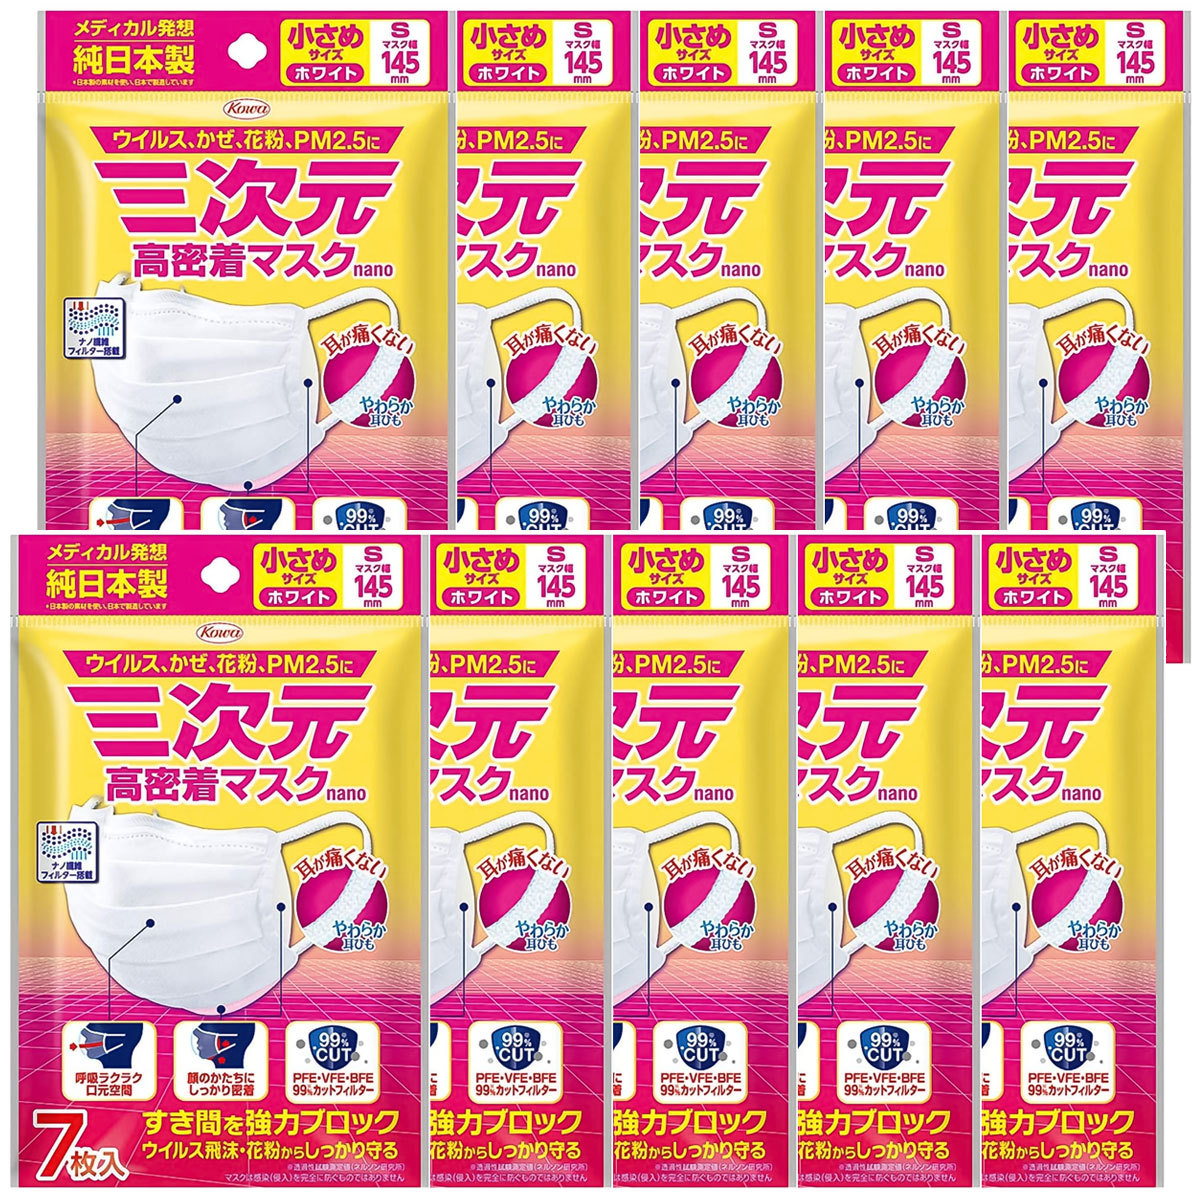 Kowa 興和 三次元 高密着マスクナノ 小さめSサイズ ホワイト 7枚入 × 10個 三次元マスク 衛生用品マスクの商品画像